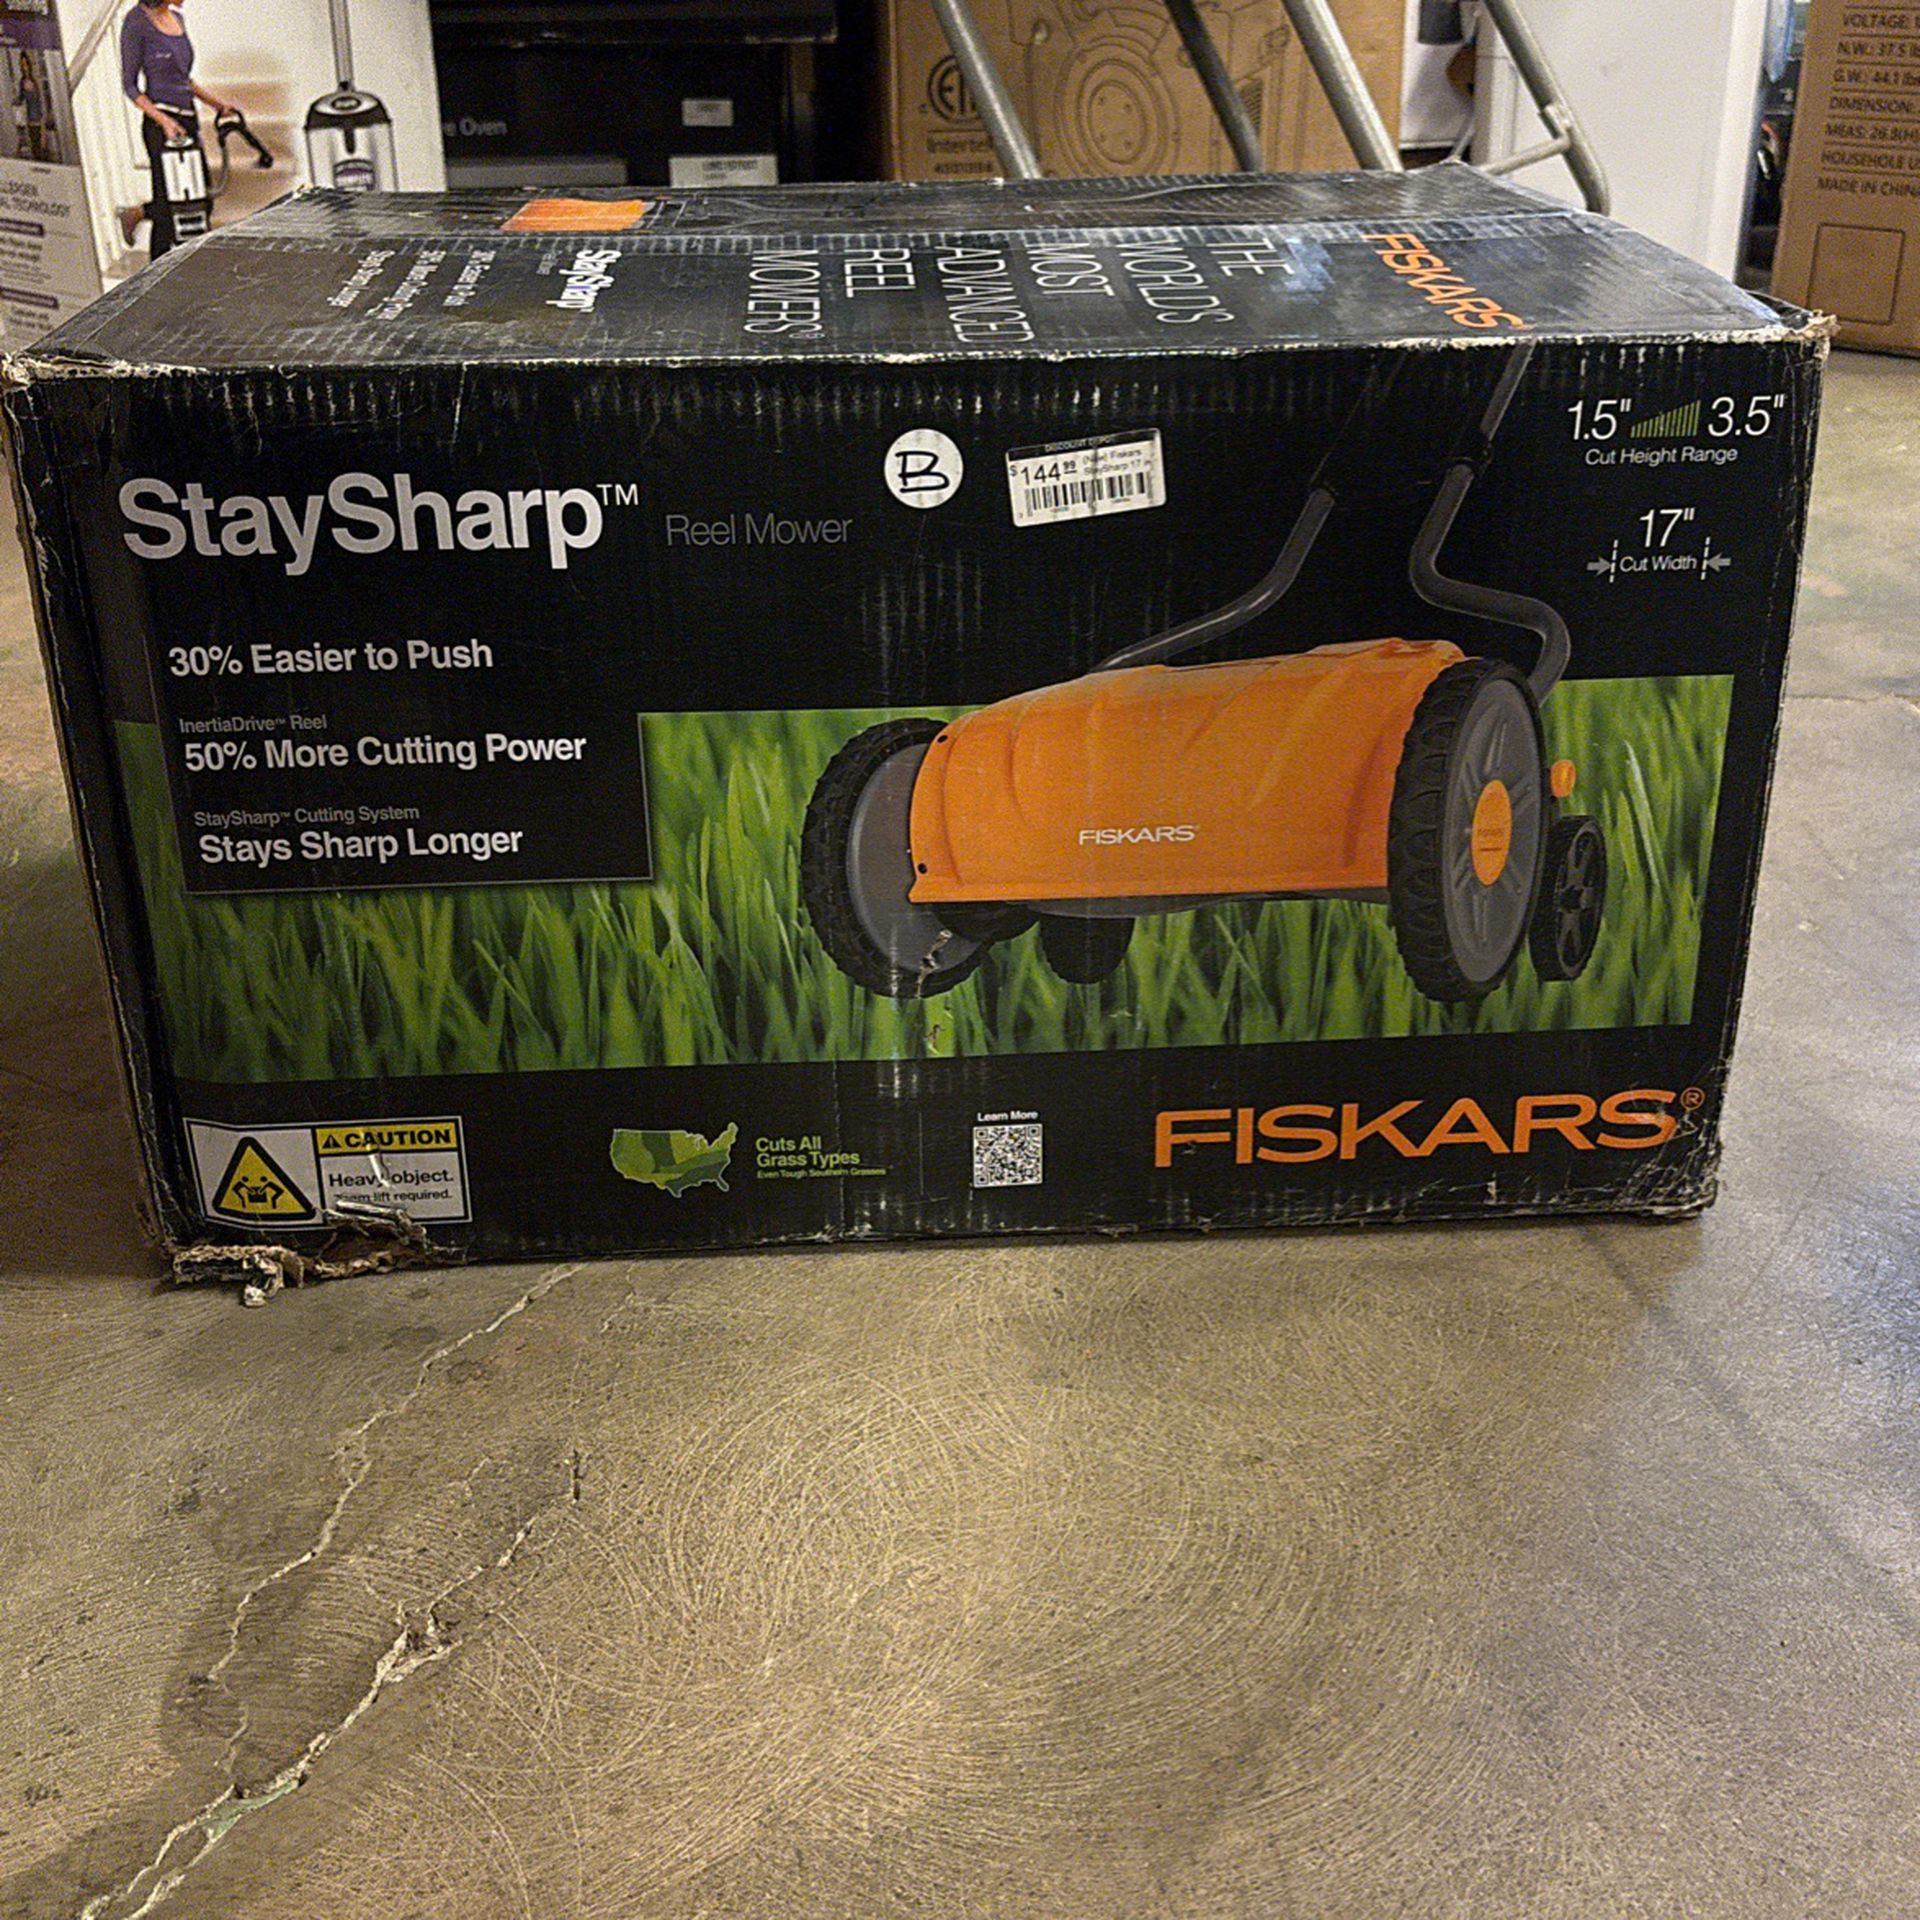 Fiskars StaySharp Push Mower - 17" Self-Propelled Lawn Mower - Yard and Garden Tools - Orange